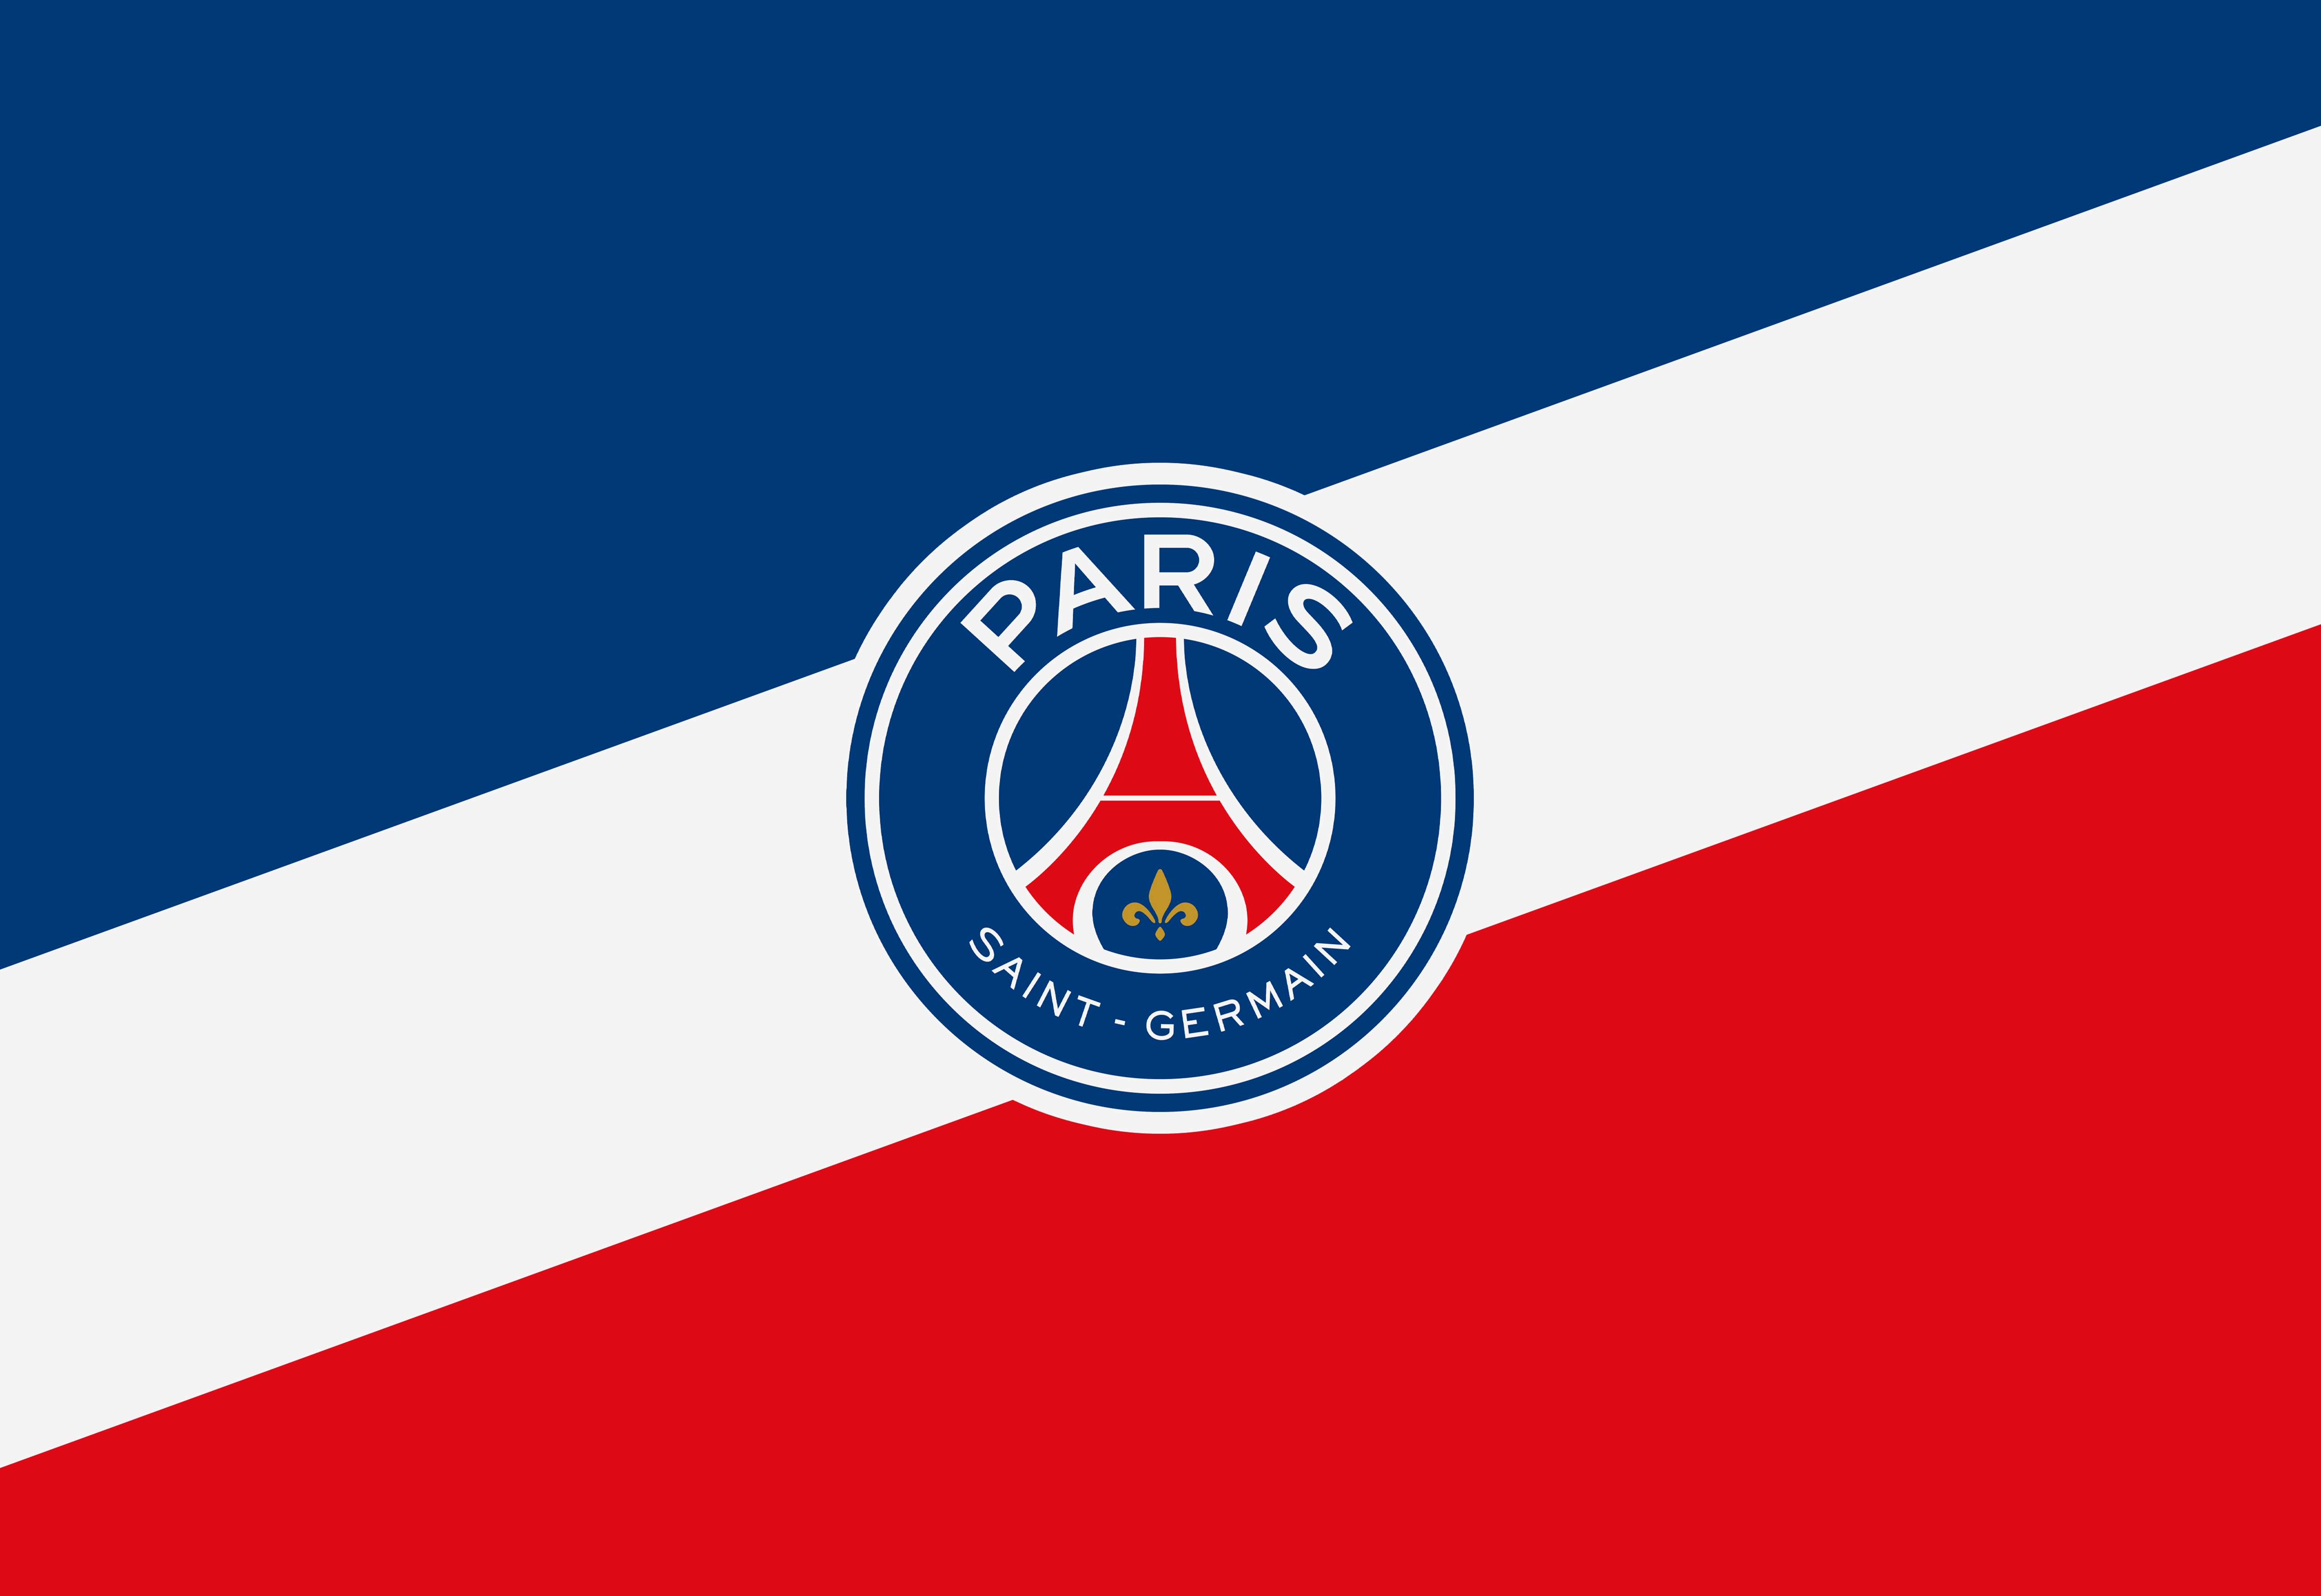 HD wallpaper, Football Club, Paris Saint Germain, Logo, France, 5K